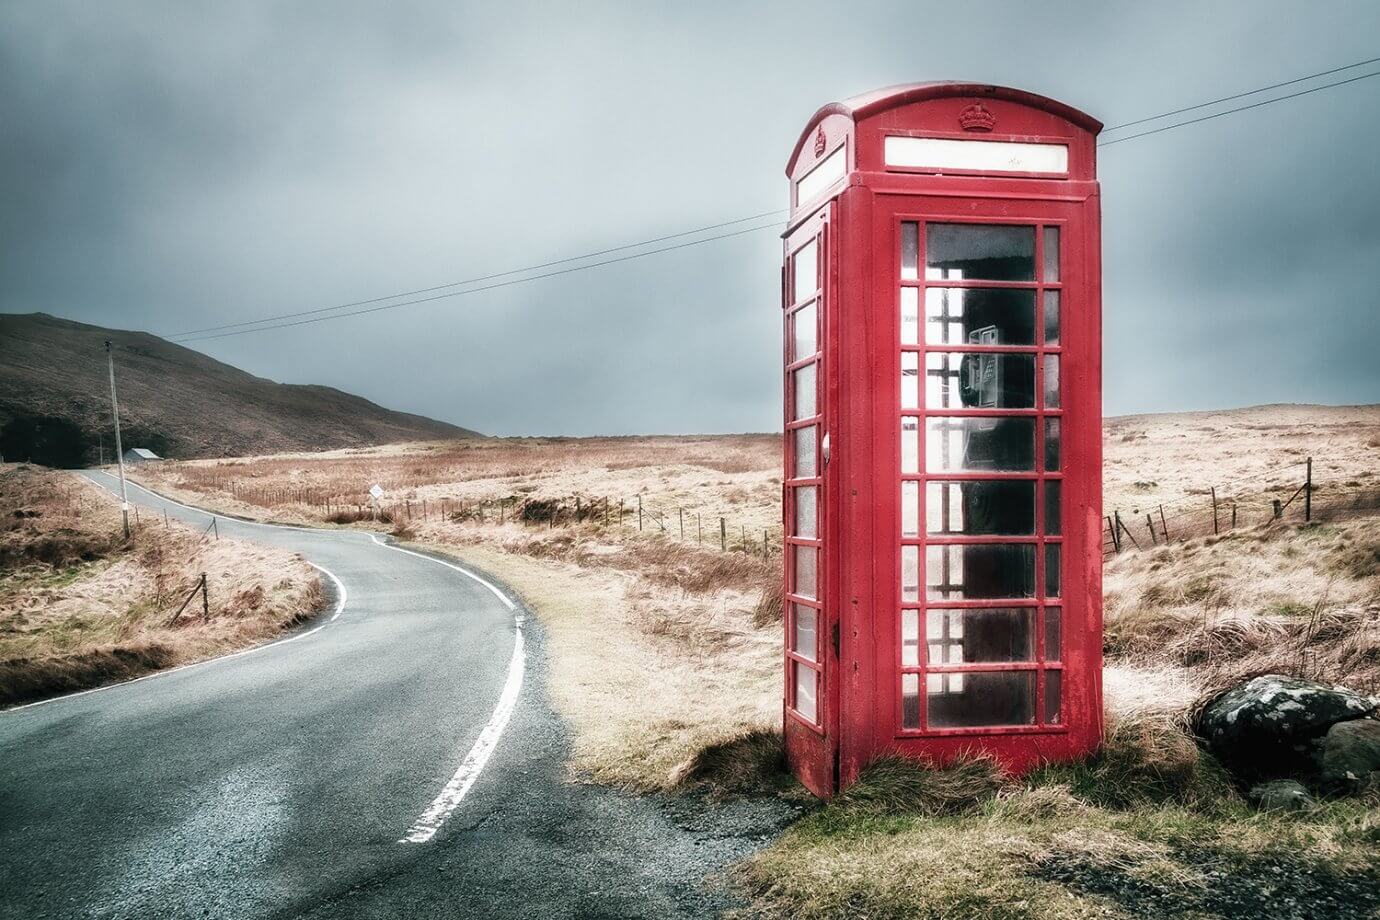 karim carella photography - red phone booth